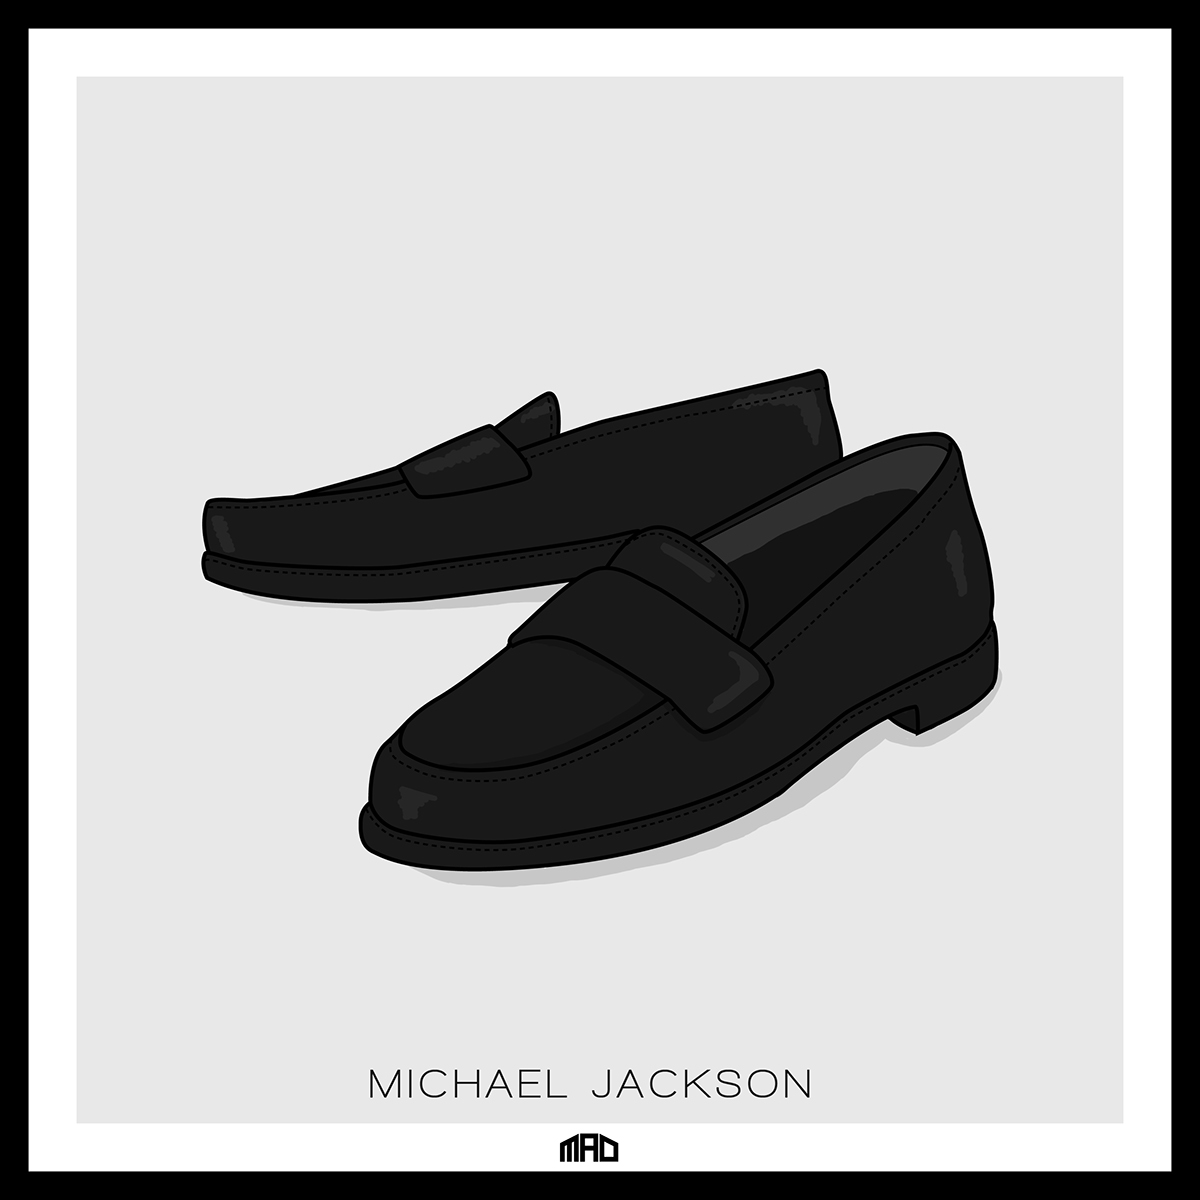 Kanye West bruce lee Michael Jackson Michael Jordan Bart Simpson Marty Mcfly ghostface killah wutang run dmc Nike adidas wallabees forest jump